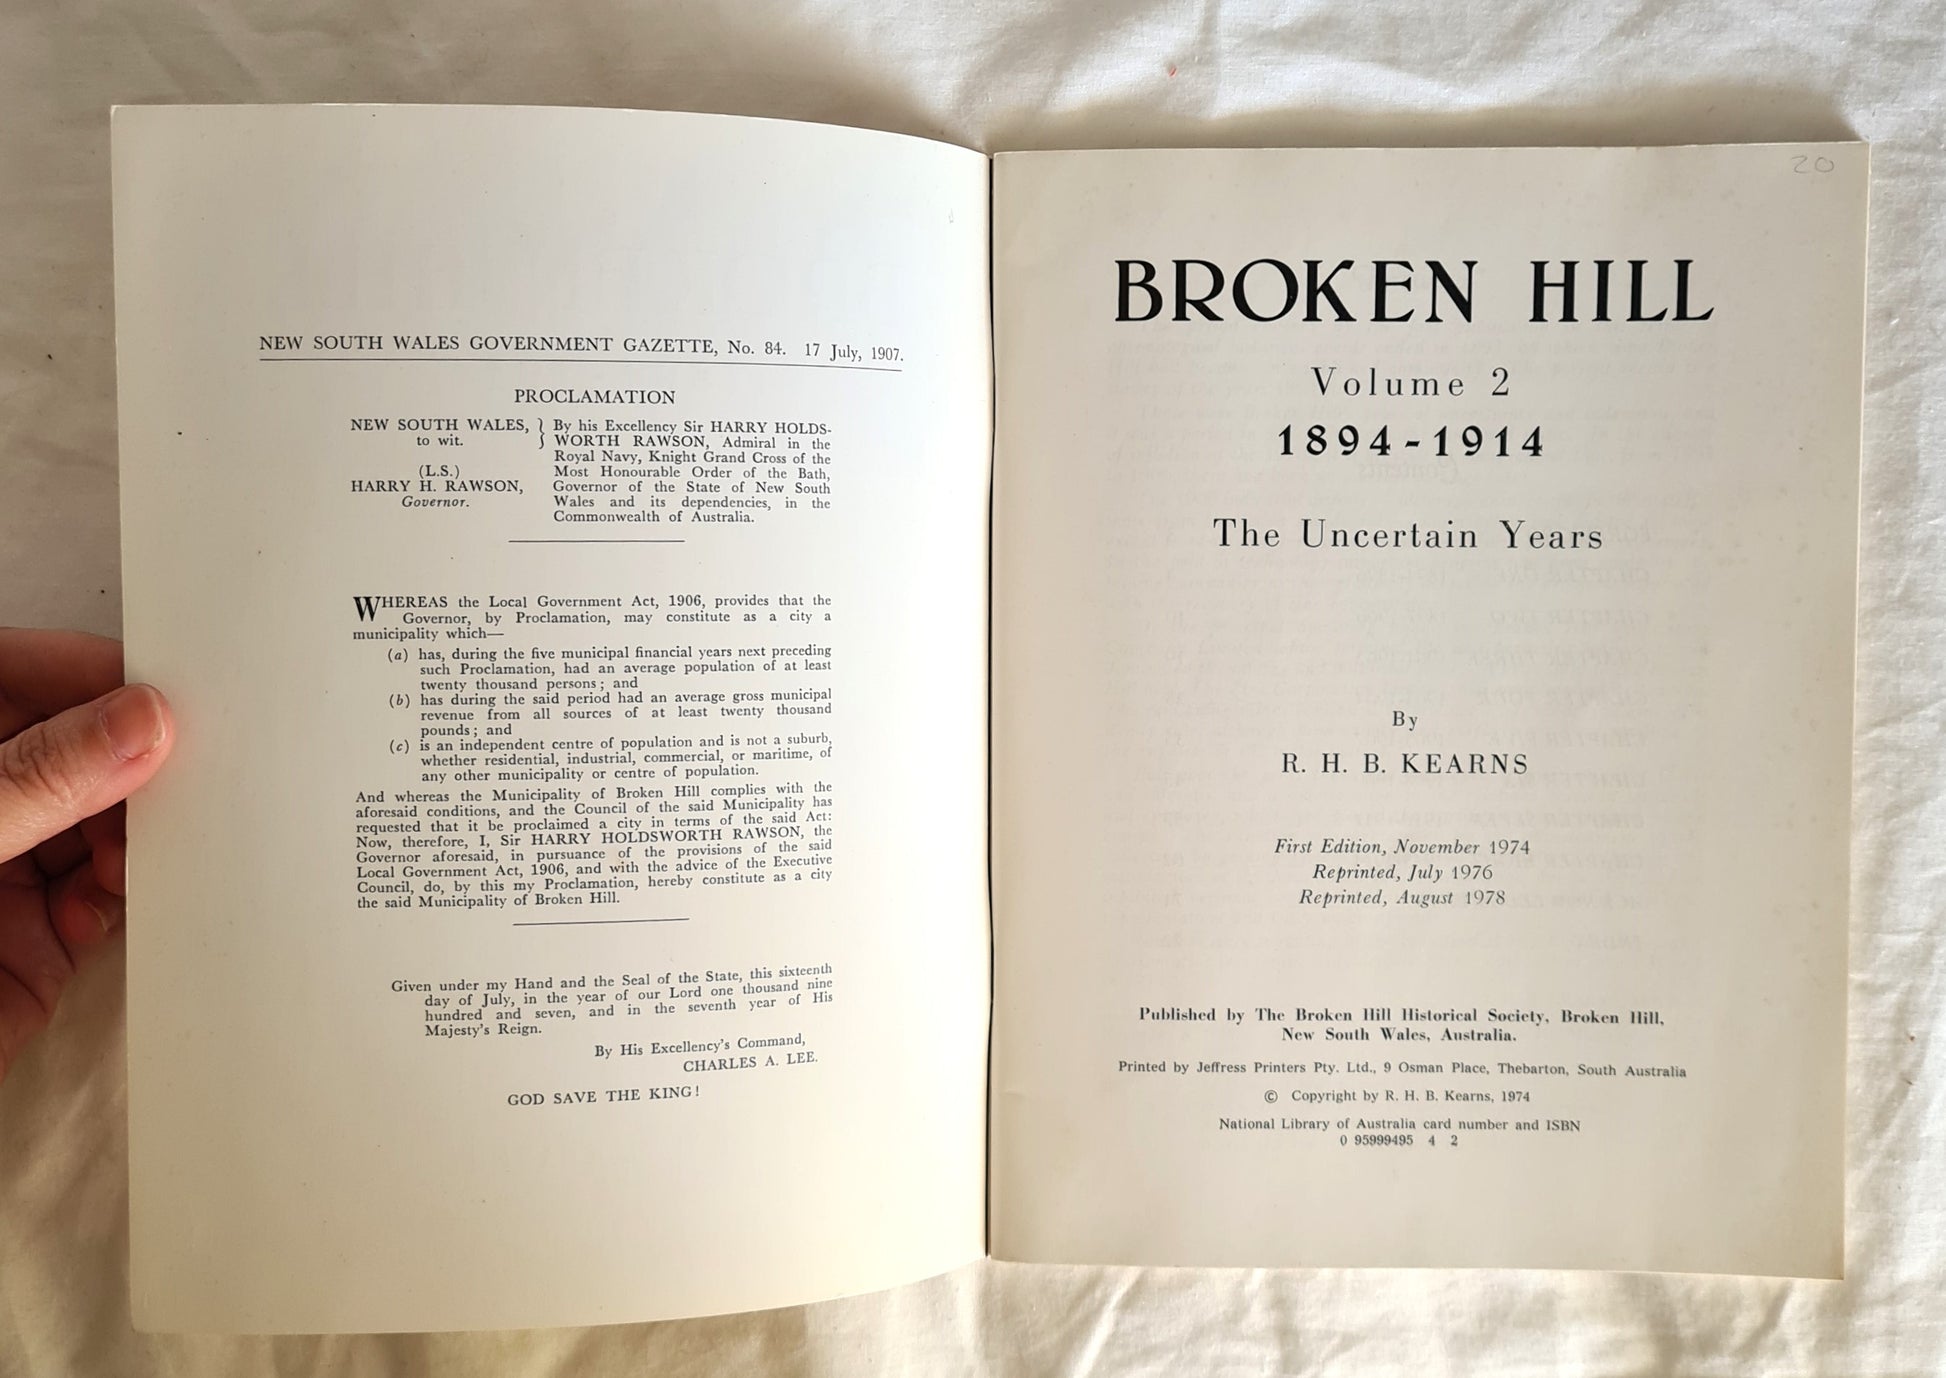 Broken Hill  Volume 2 1894-1914  The Uncertain Years  by R. H. B. Kearns